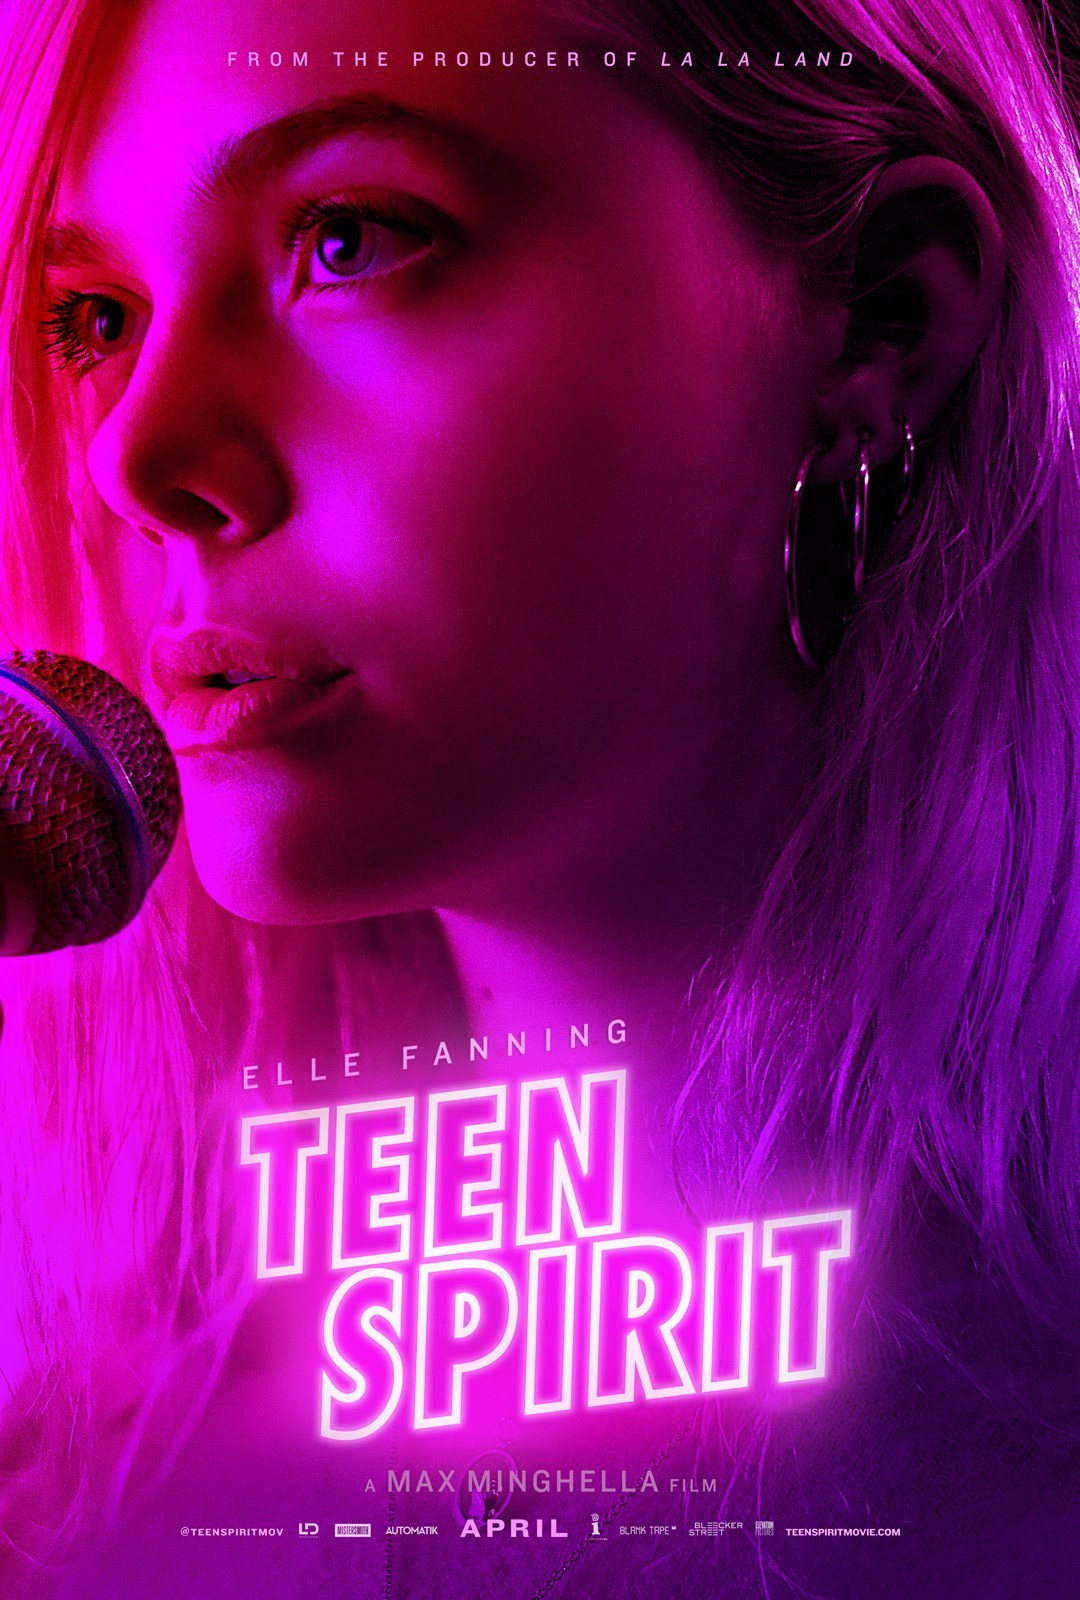 Teen Spirit (2019) Watch Full Video Free Online